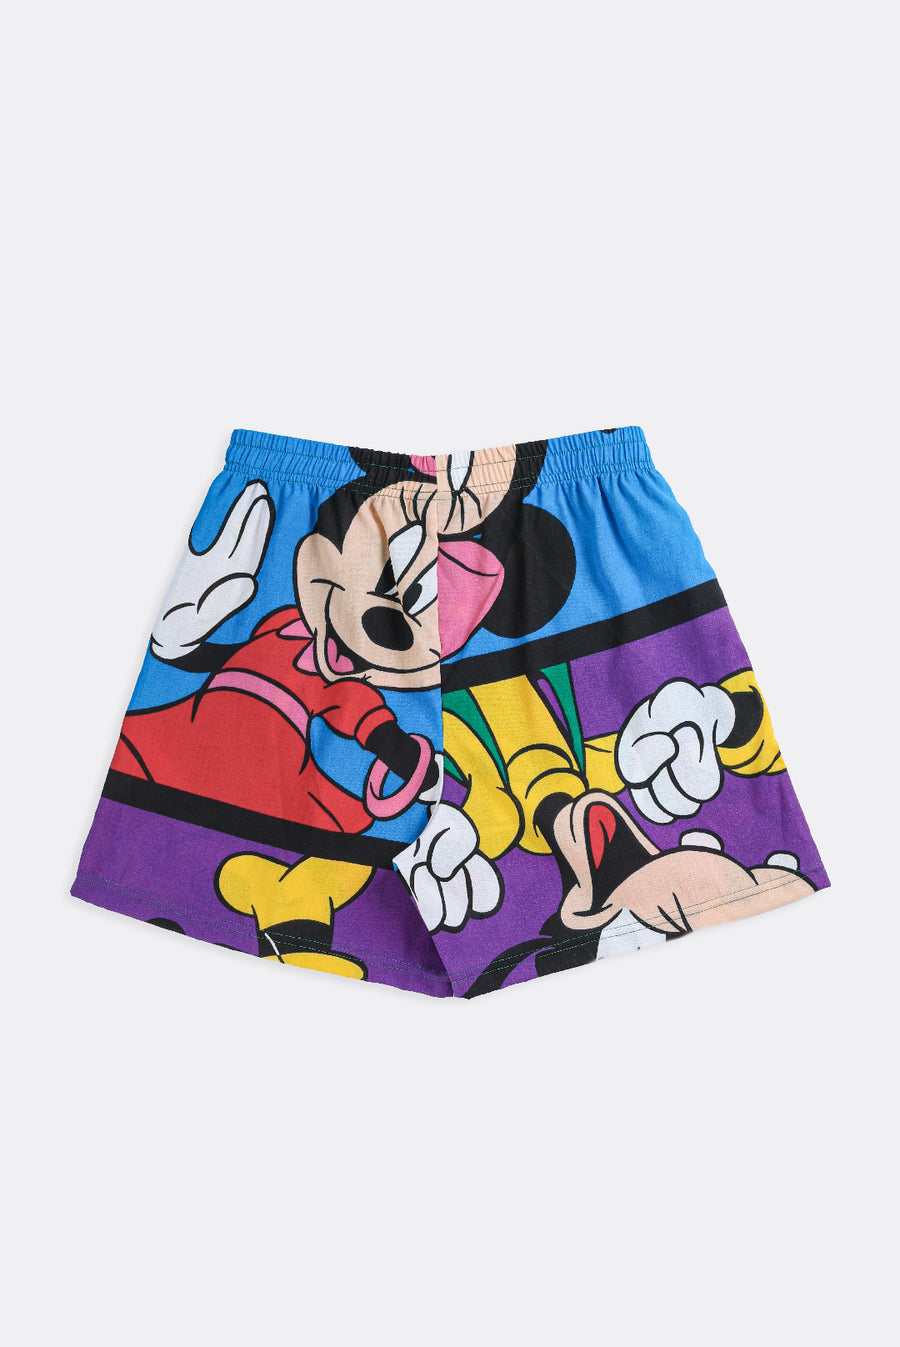 Unisex Rework Mickey Mouse Boxer Shorts - M